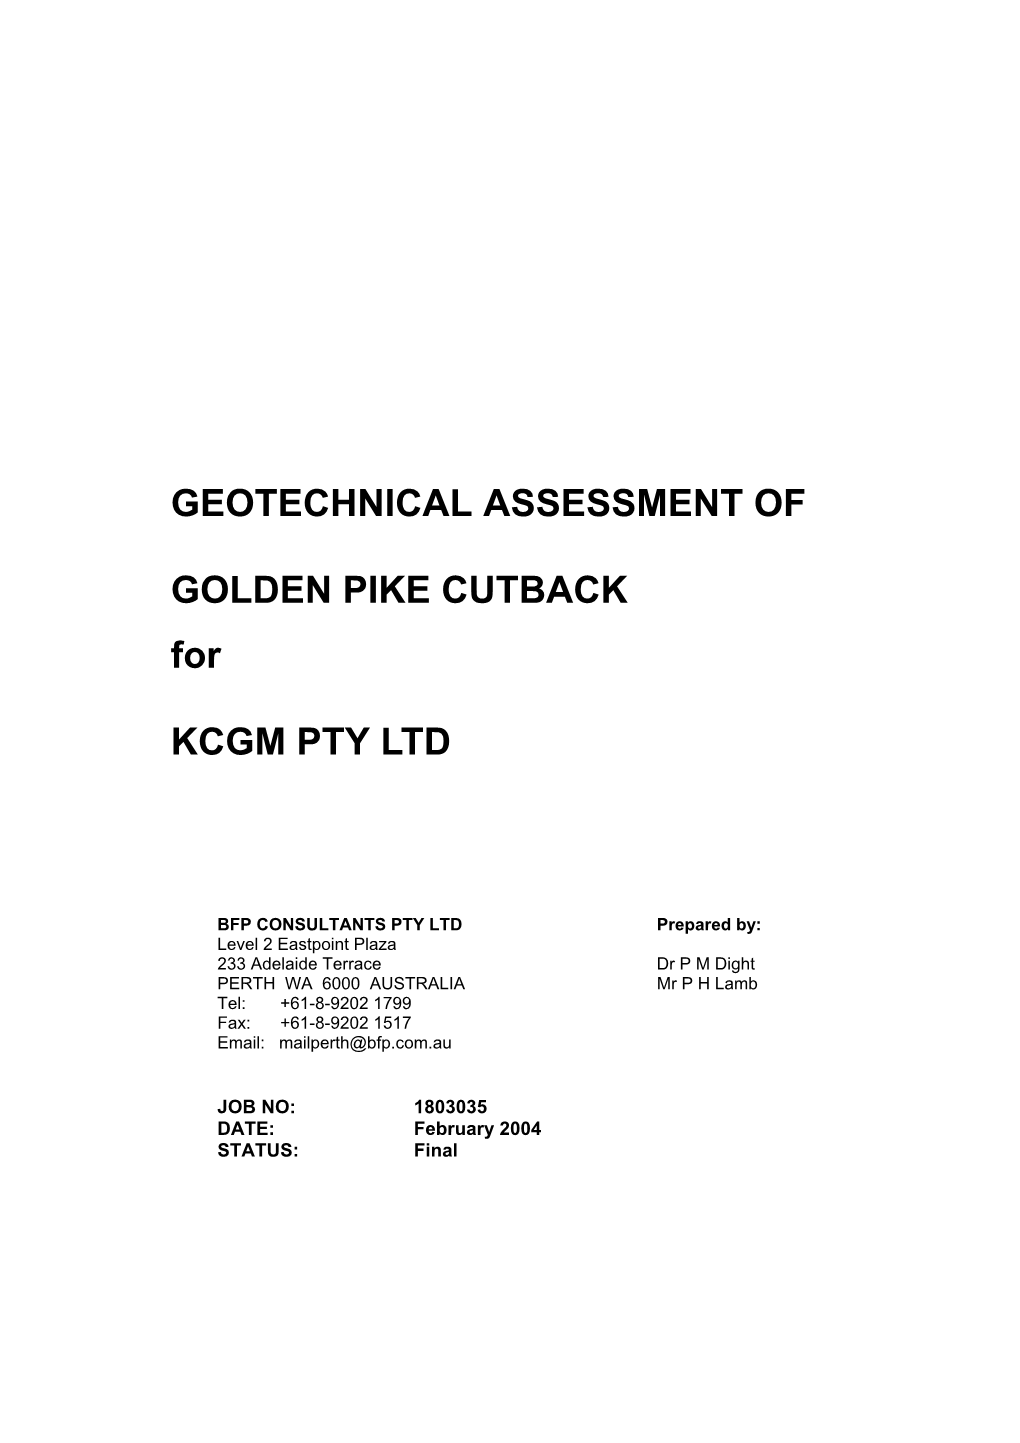 Geotechnical Assessment of Golden Pike Cutback for KCGM Pty Ltd